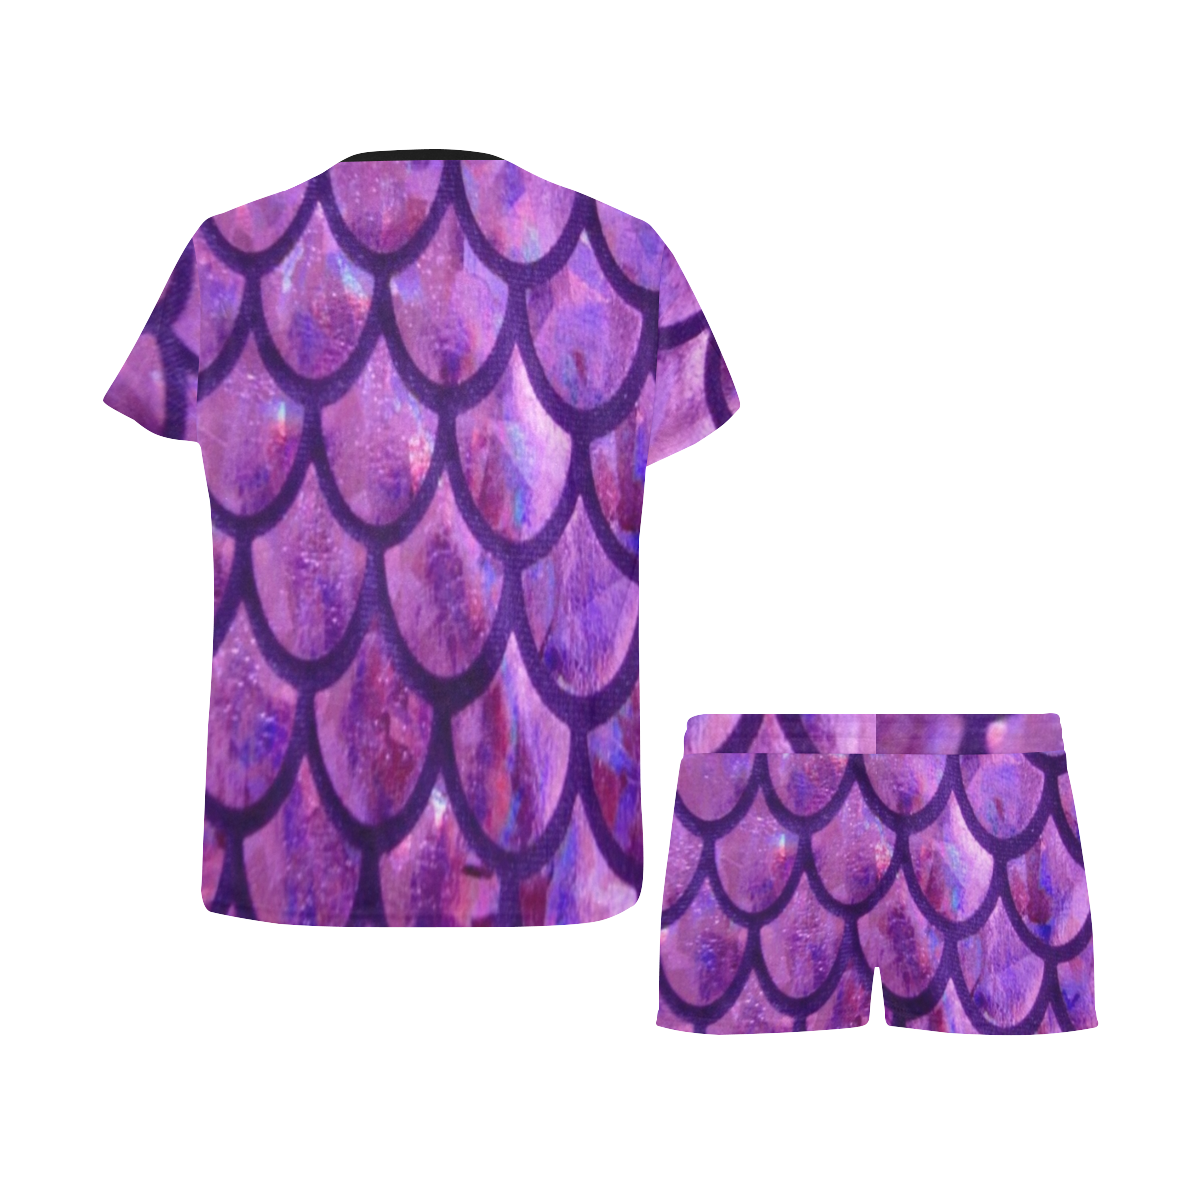 Mermaid SCALES Purple Women's Short Pajama Set